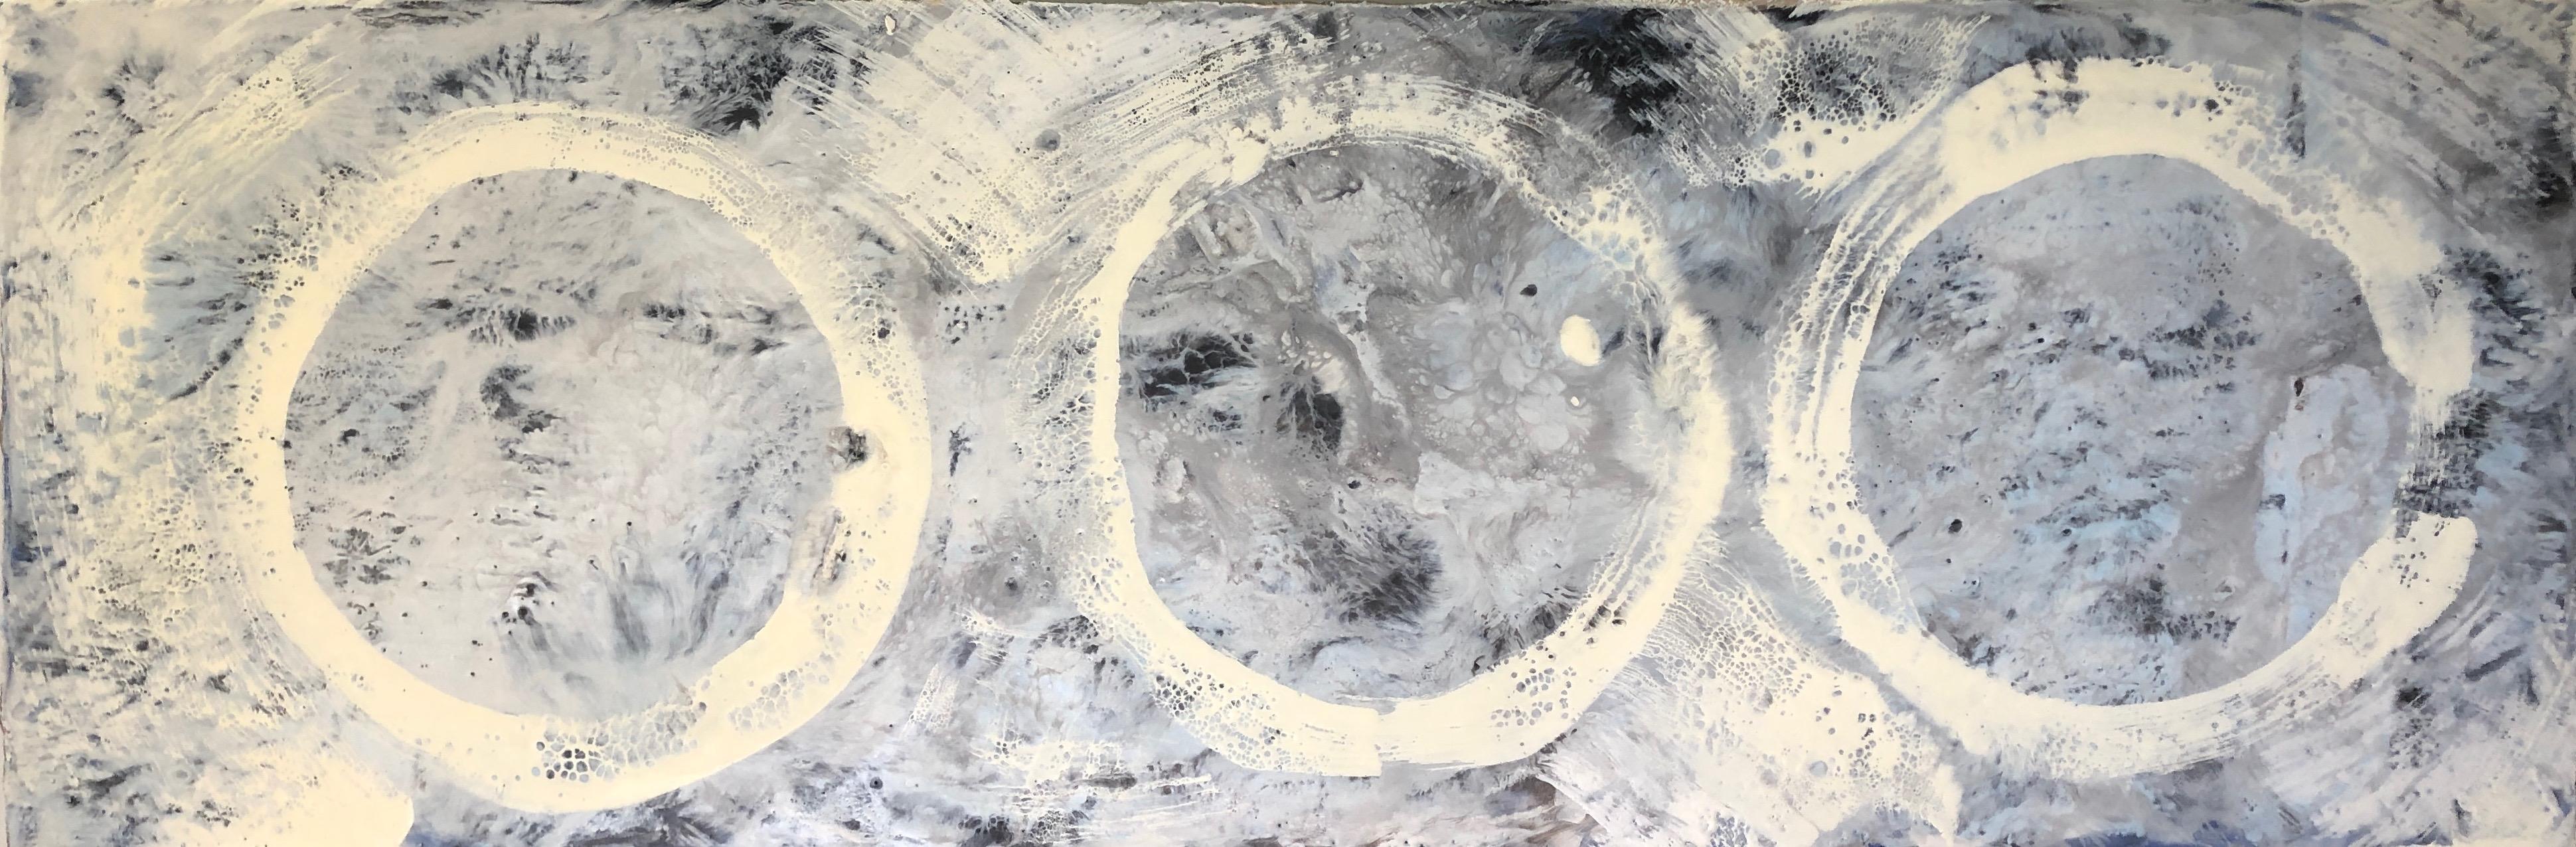 Andrea Bonfils - Triple Moon, Painting 2019